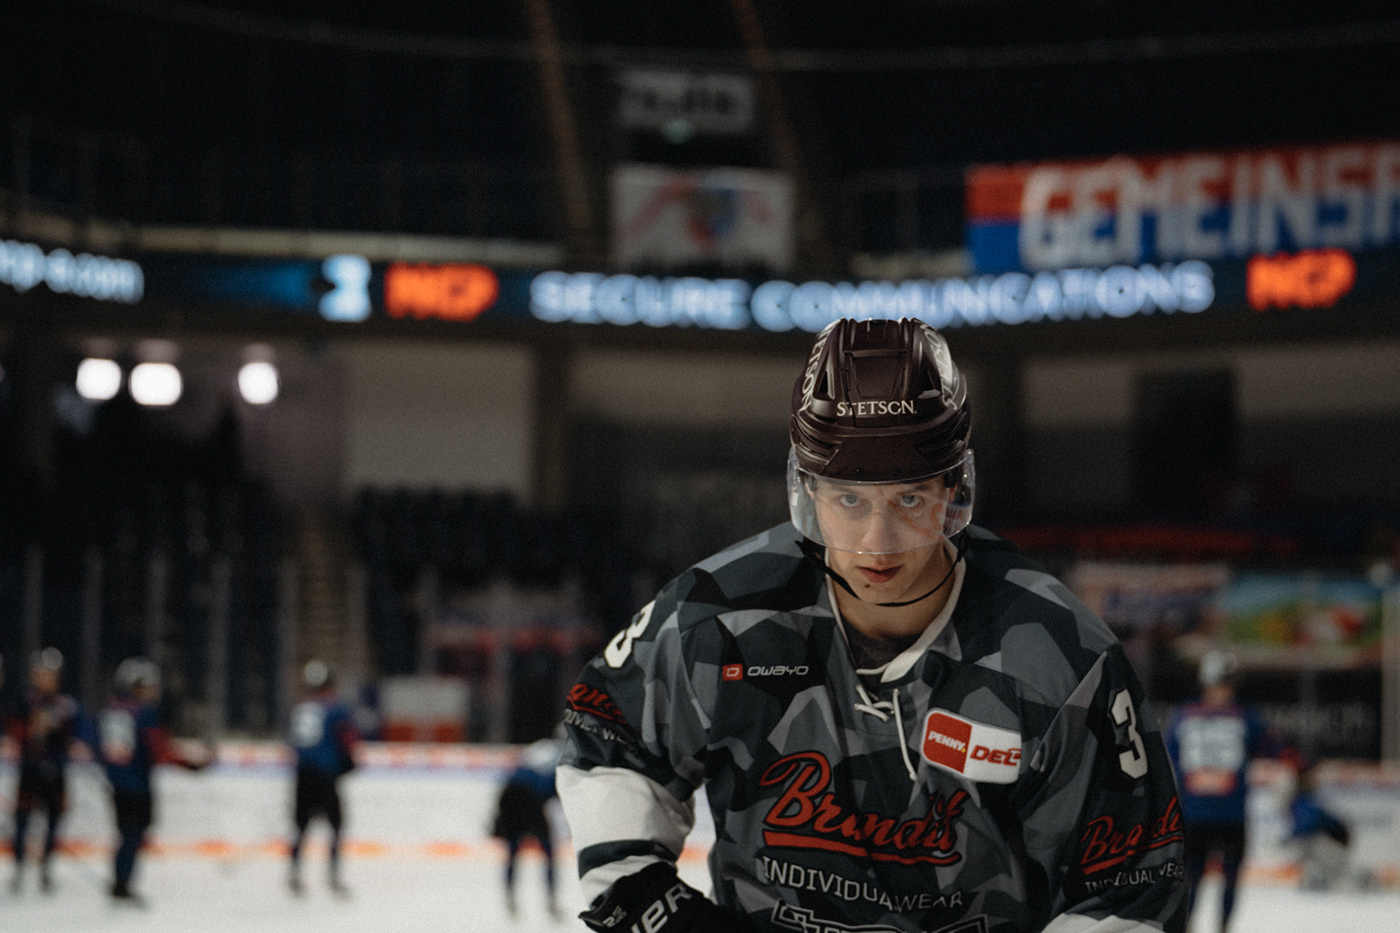 35mm BASTI SEVASTOS Documentary  Eishockey Icehockey köln Kölner Haie Leica reportage